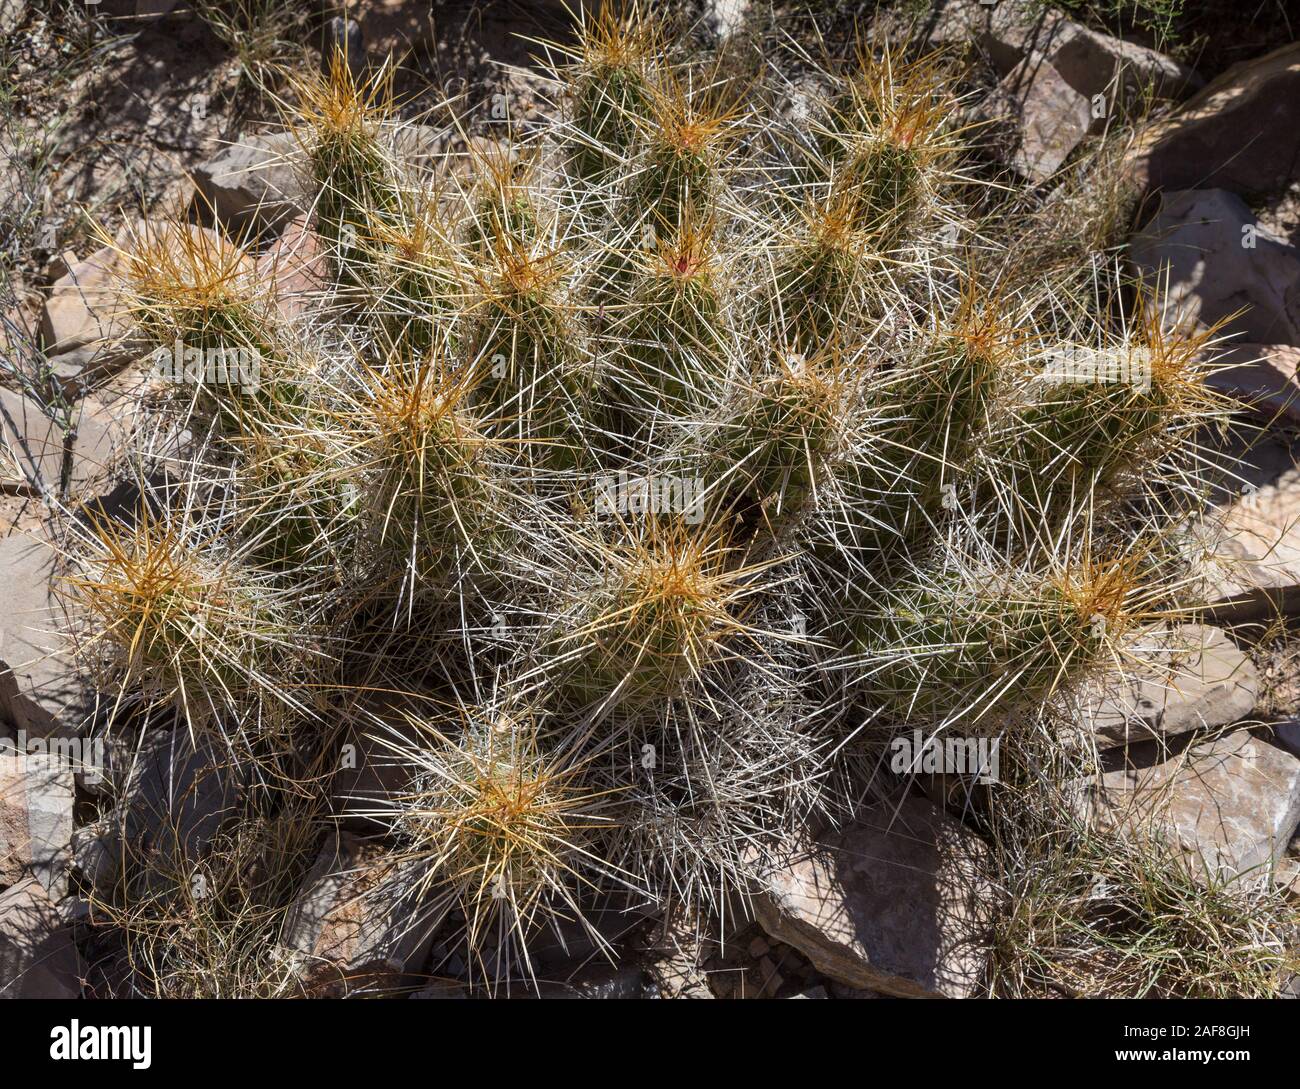 Parco nazionale di Big Bend, Texas, Stati Uniti d'America. Deserto del Chihuahuan vegetazione: fragola Pitaya. Foto Stock